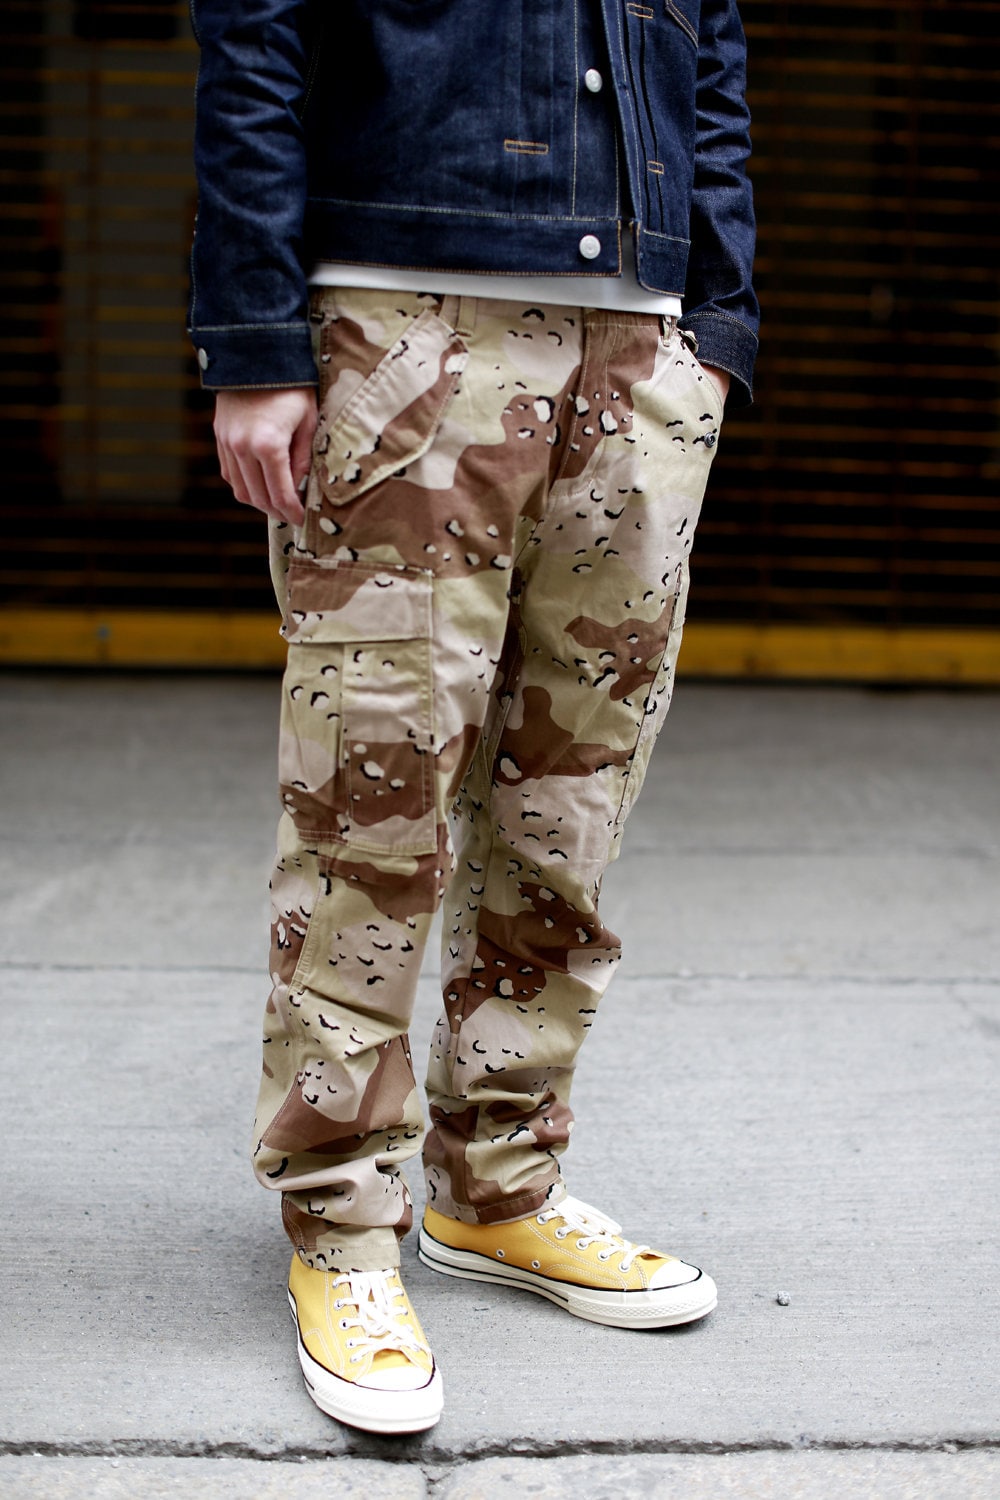 Military Issue, Pants, Vtg Us Military Issue Desert Camo Cargo Dcu Pants  Trousers Medium Reg Am3t5